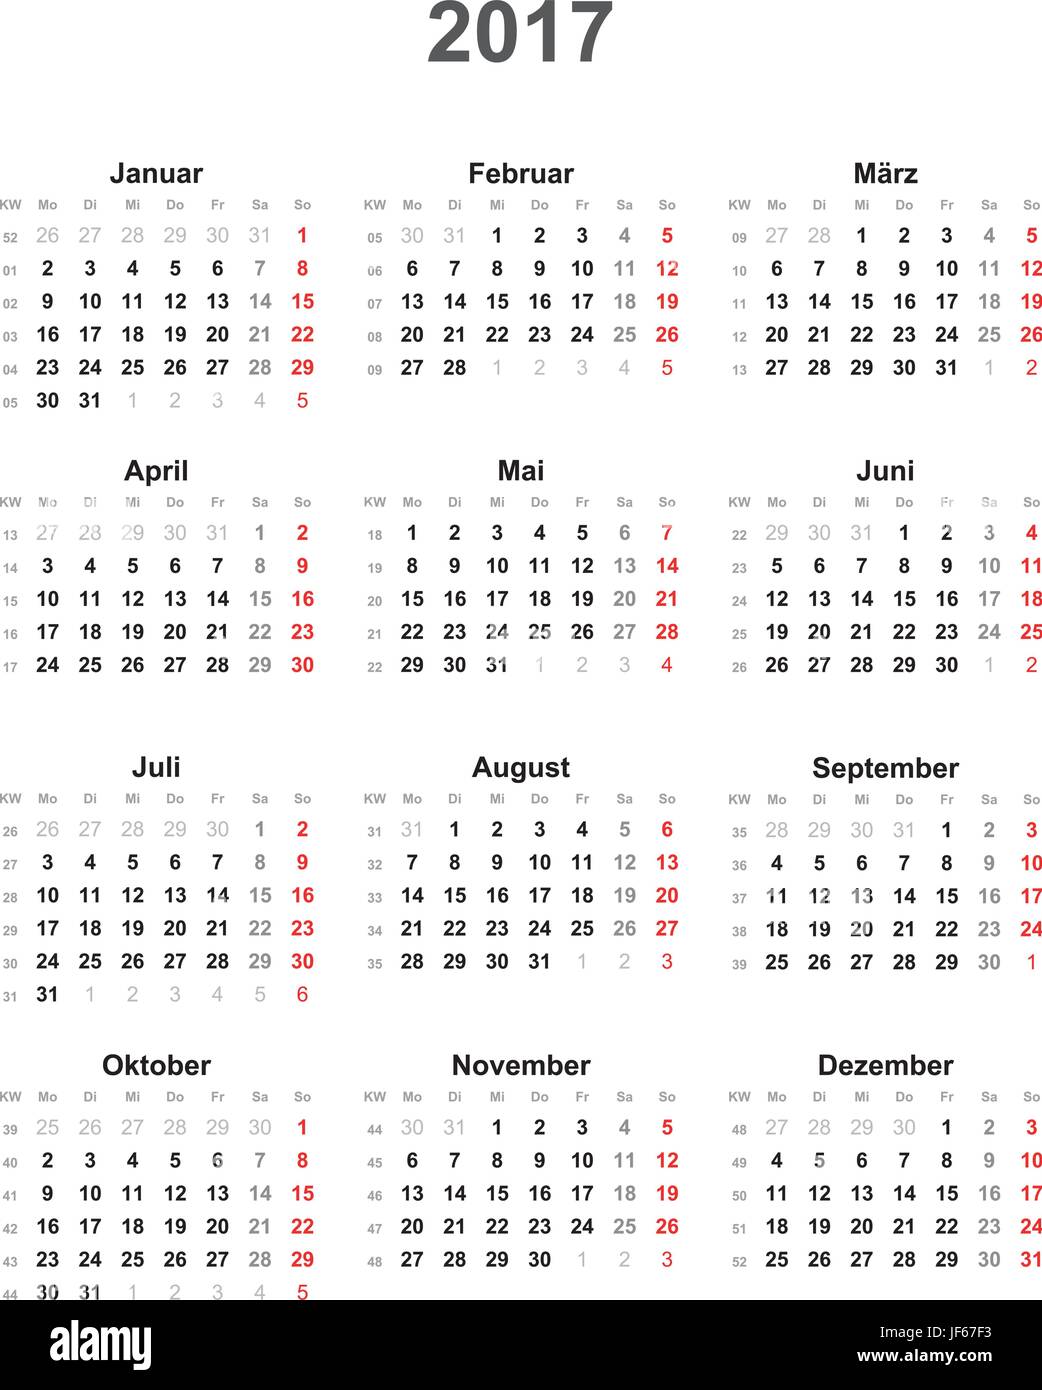 Kalender mit kalenderwochen hi-res stock photography and images - Alamy